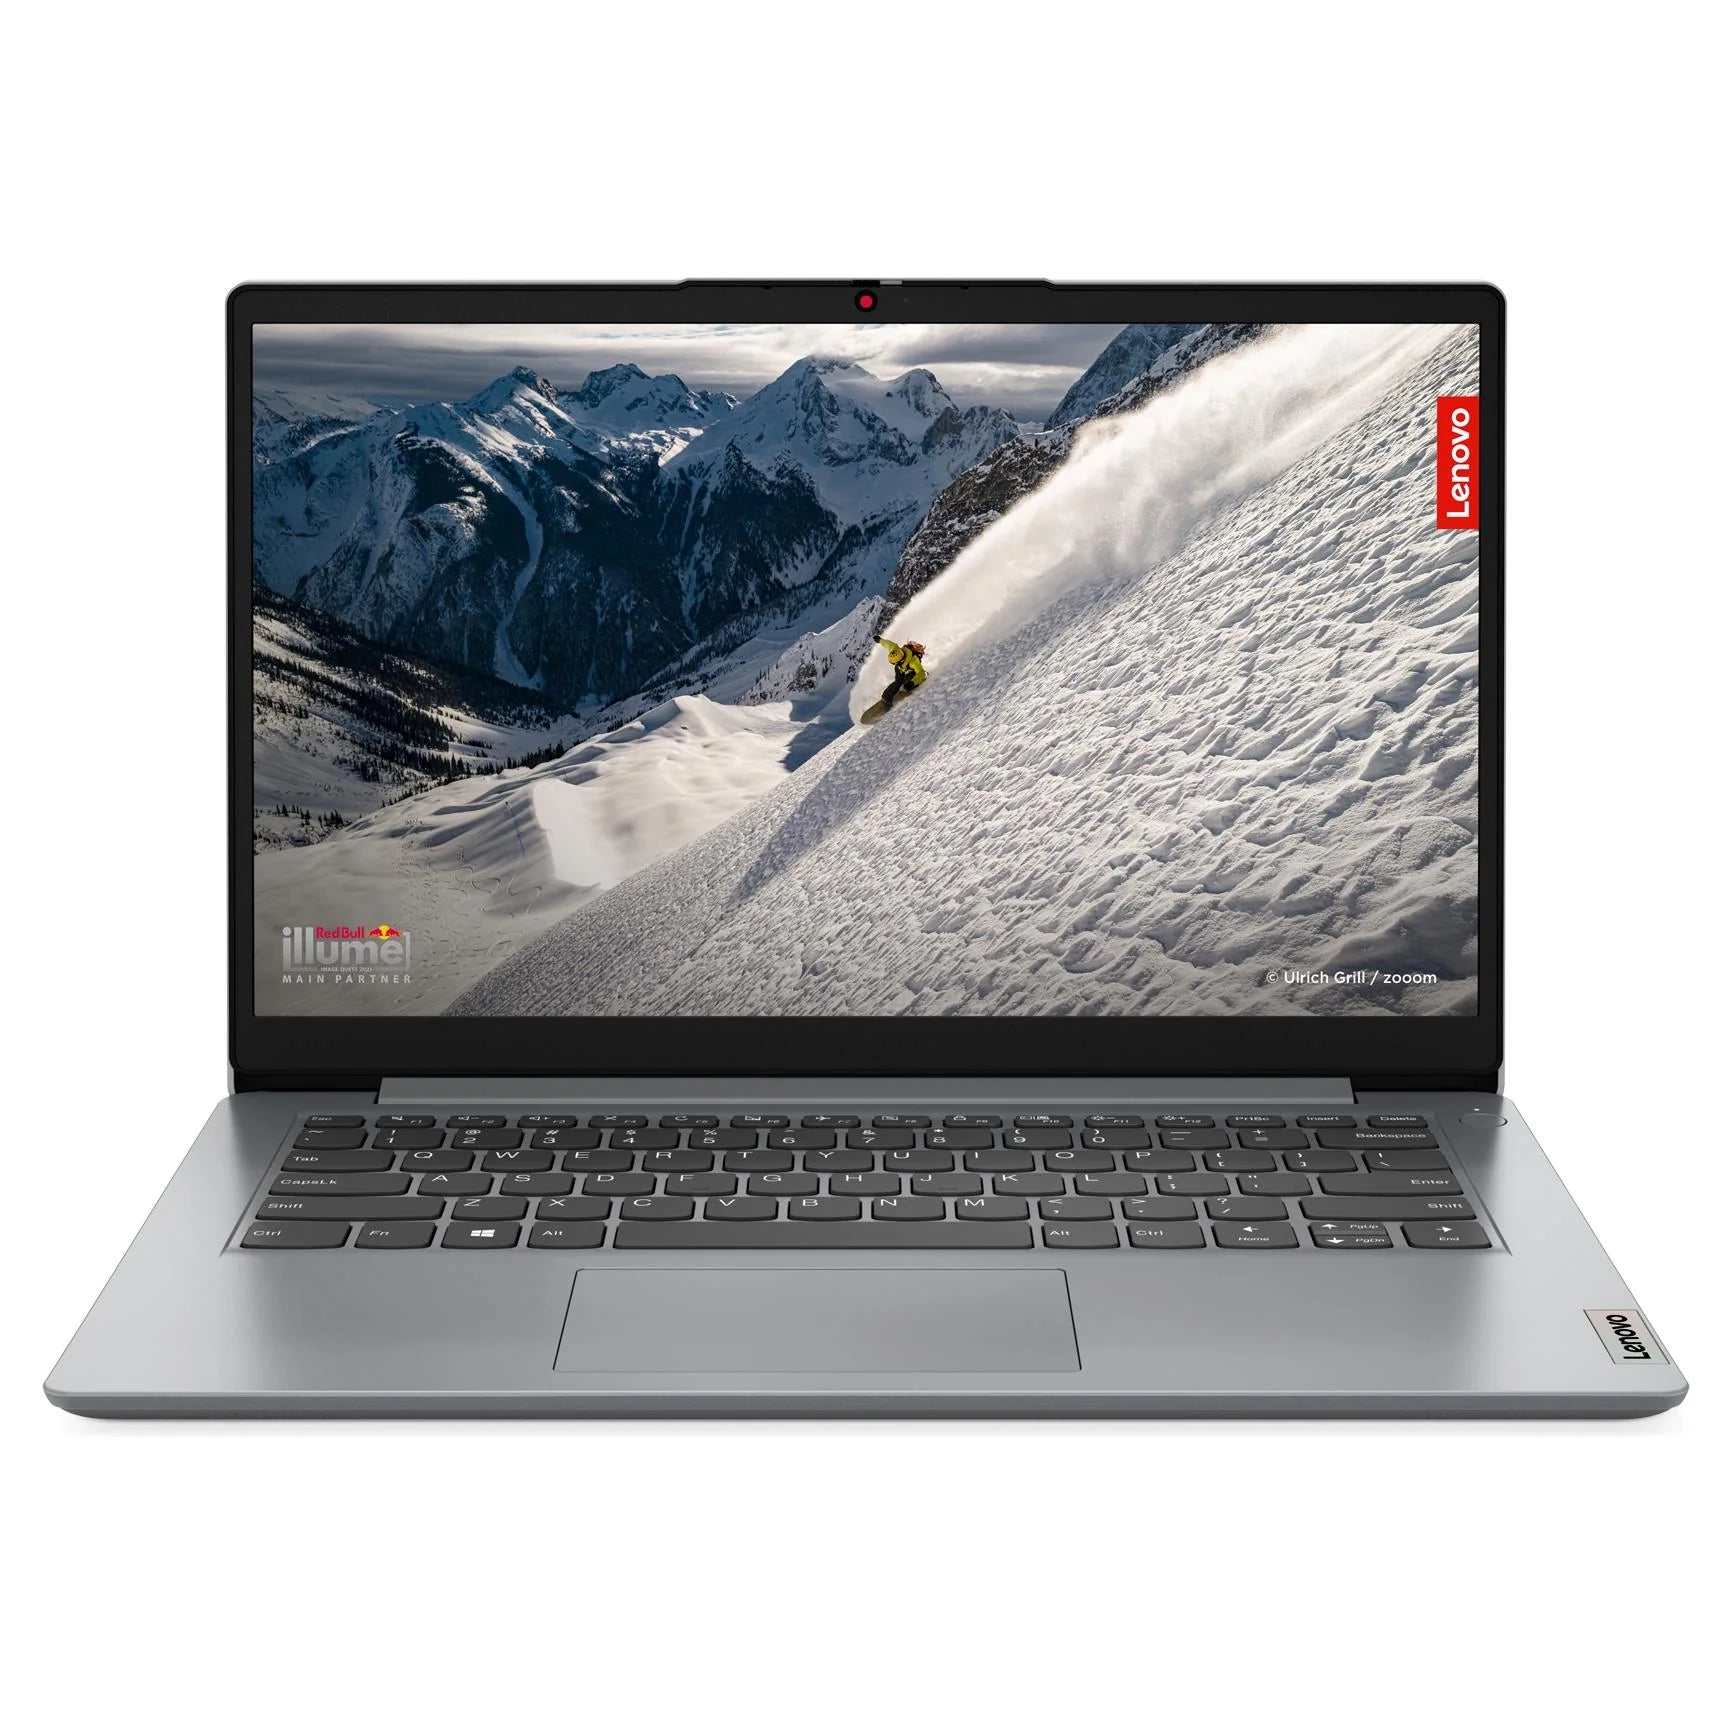 Lenovo IdeaPad Slim 1 14" Laptop AMD Athlon 3050U 256GB 8GB RAM - Very Good Condition